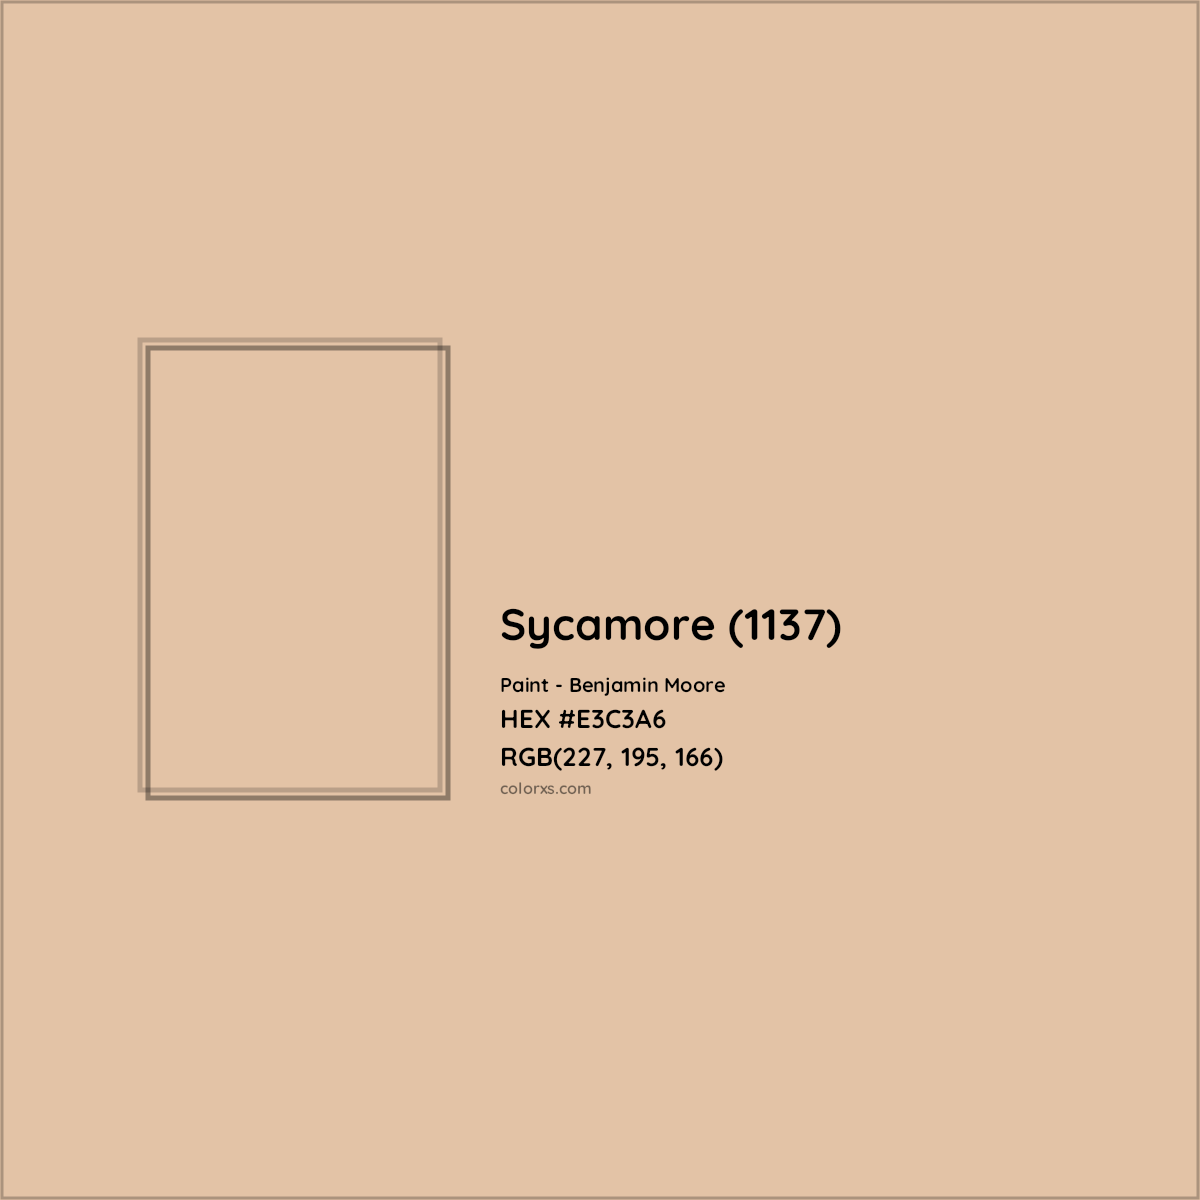 HEX #E3C3A6 Sycamore (1137) Paint Benjamin Moore - Color Code